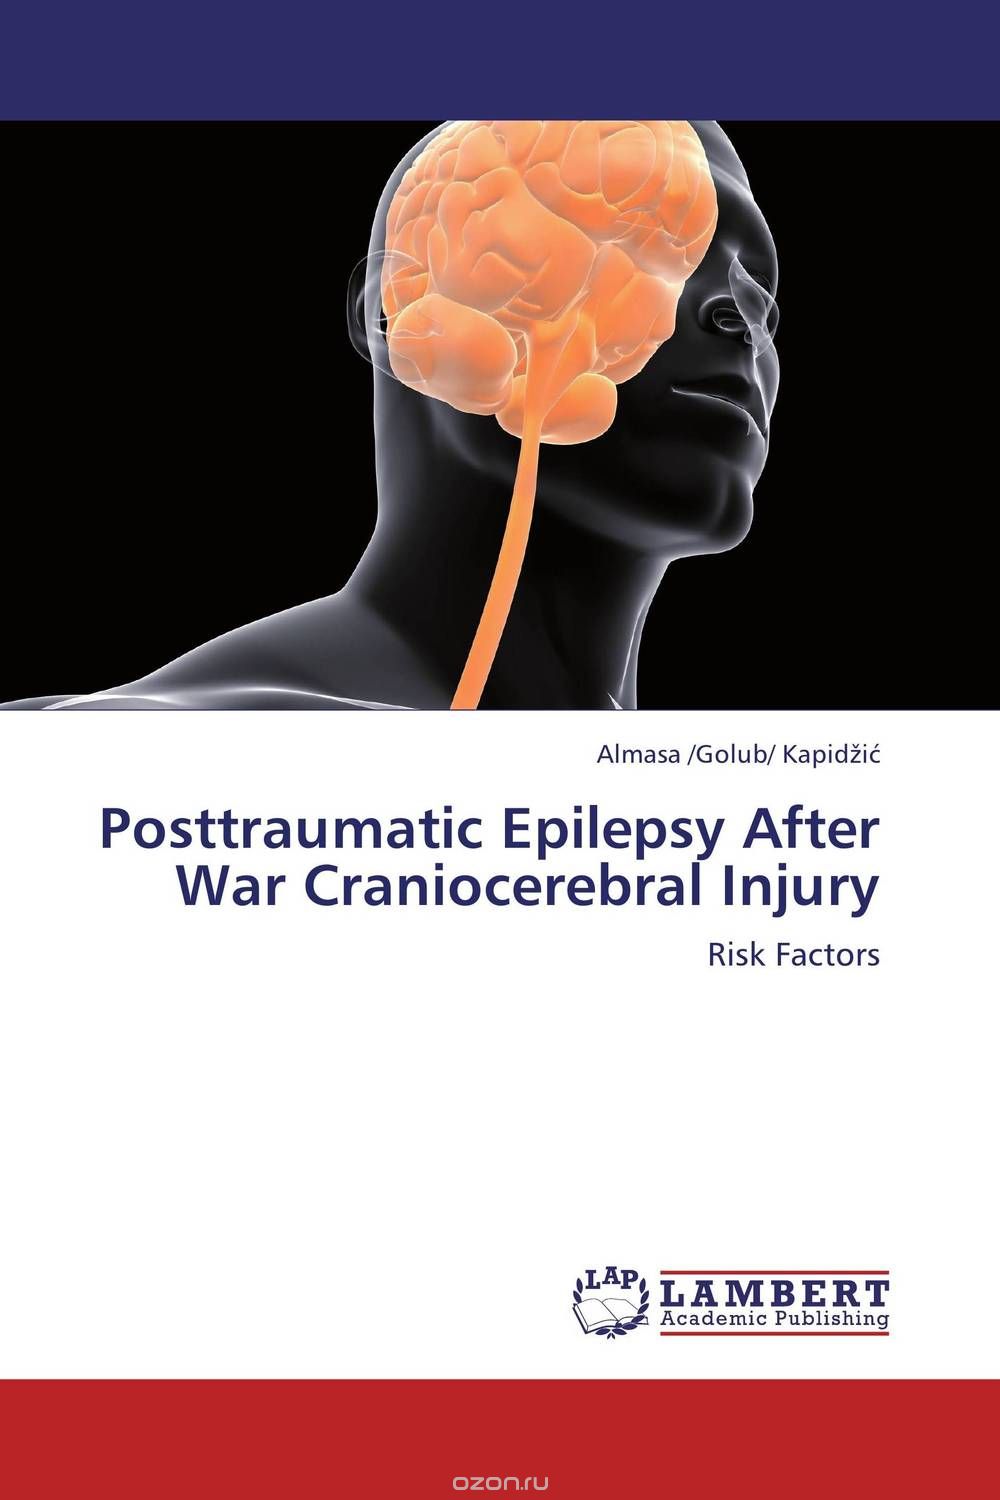 Скачать книгу "Posttraumatic Epilepsy After War Craniocerebral Injury"